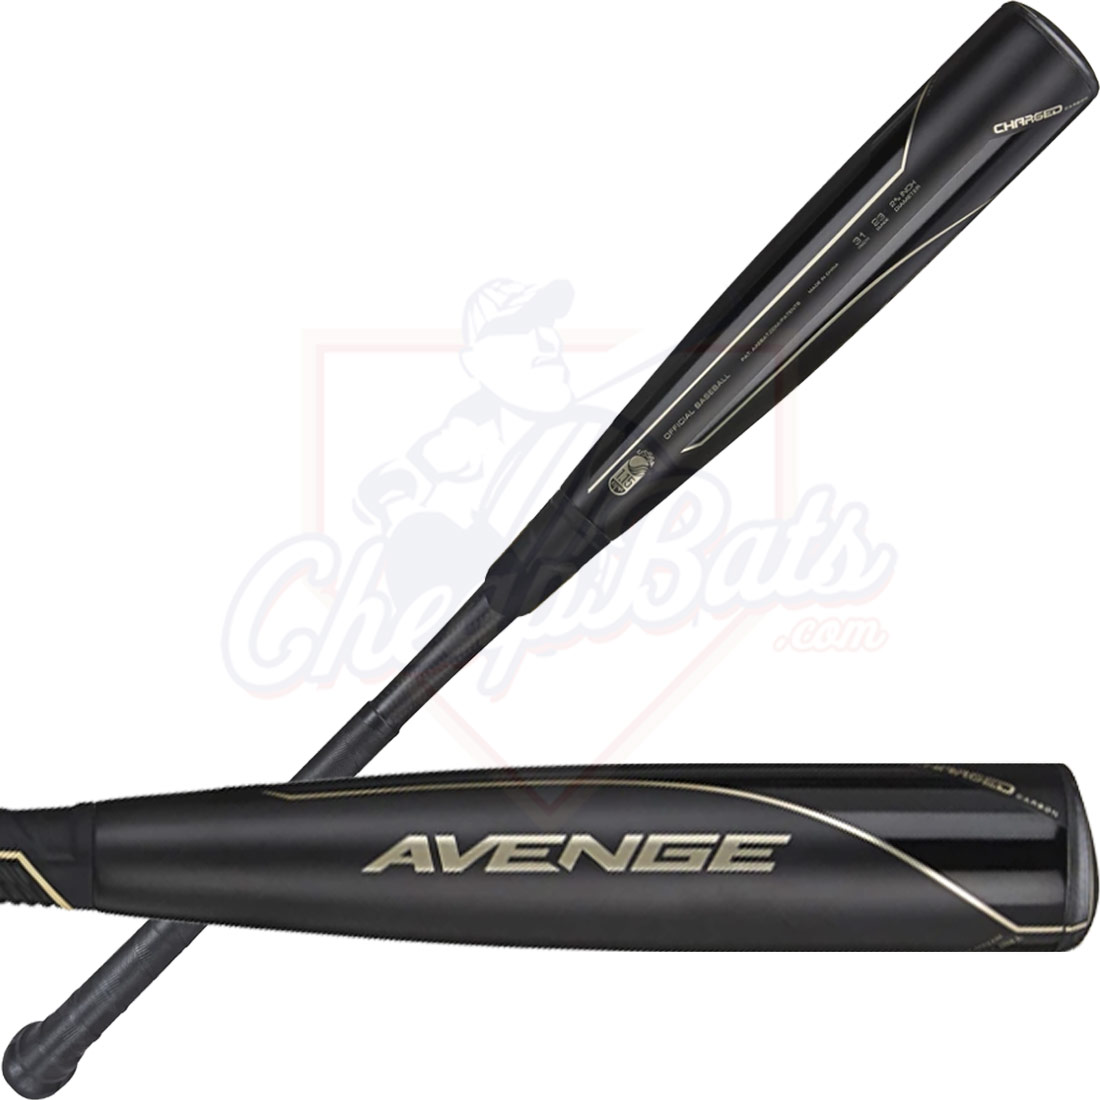 2020 Axe Avenge Youth USSSA Baseball Bat -8oz L173H